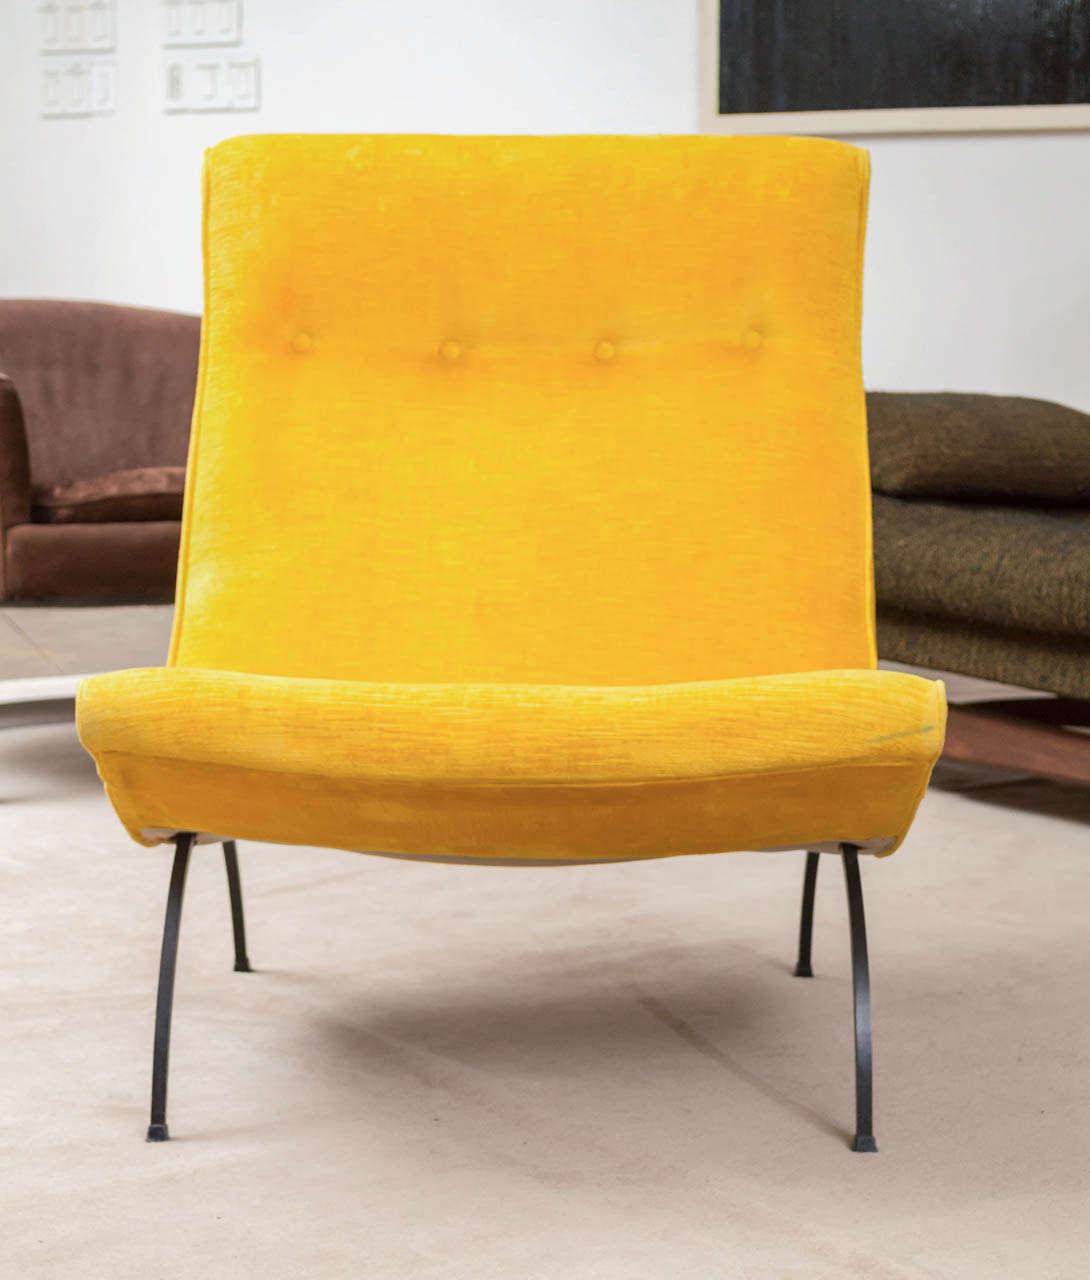 A scoop chair by Milo Baughman in lemon yellow velveteen upholstery. Curved steel legs.